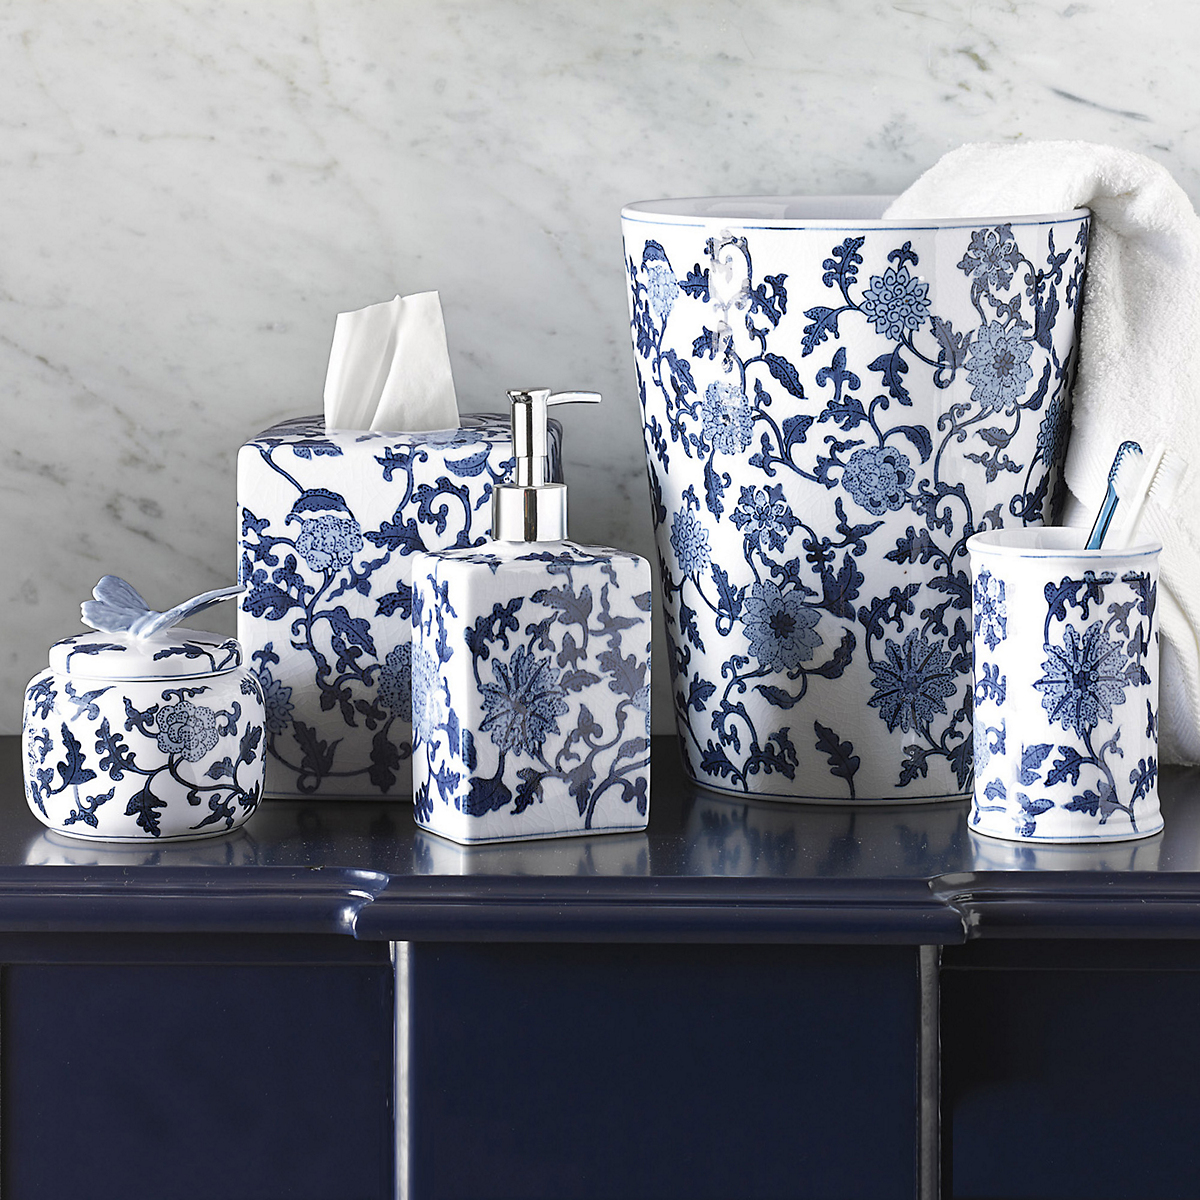 Blue & White Bath Porcelain Wastebasket Gump's